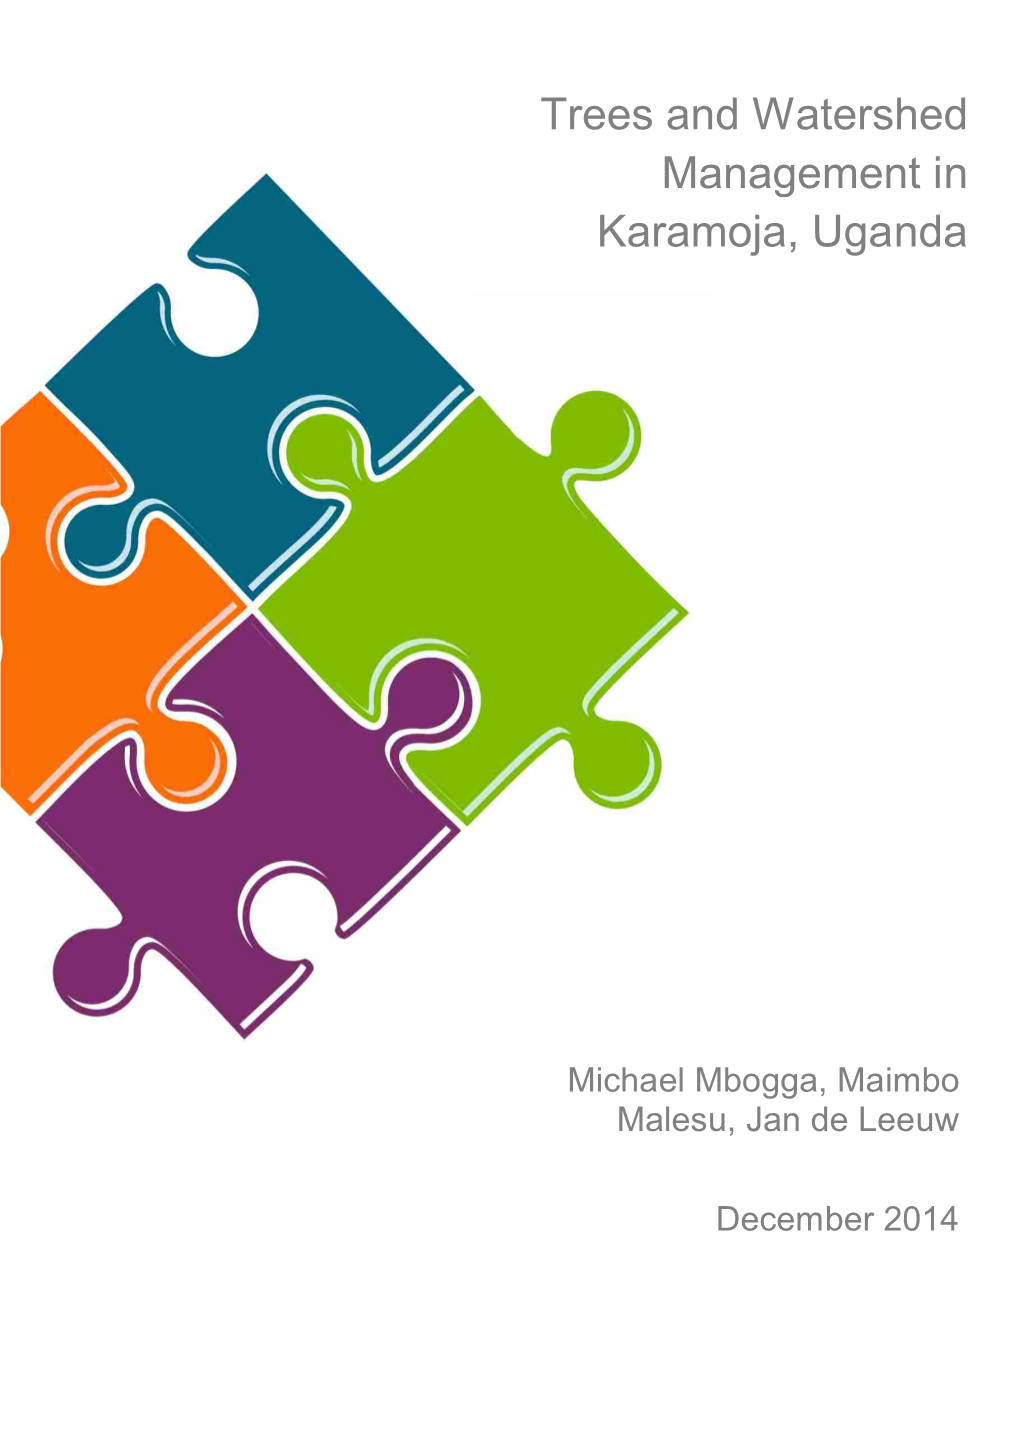 Trees and Watershed Management in Karamoja, Uganda